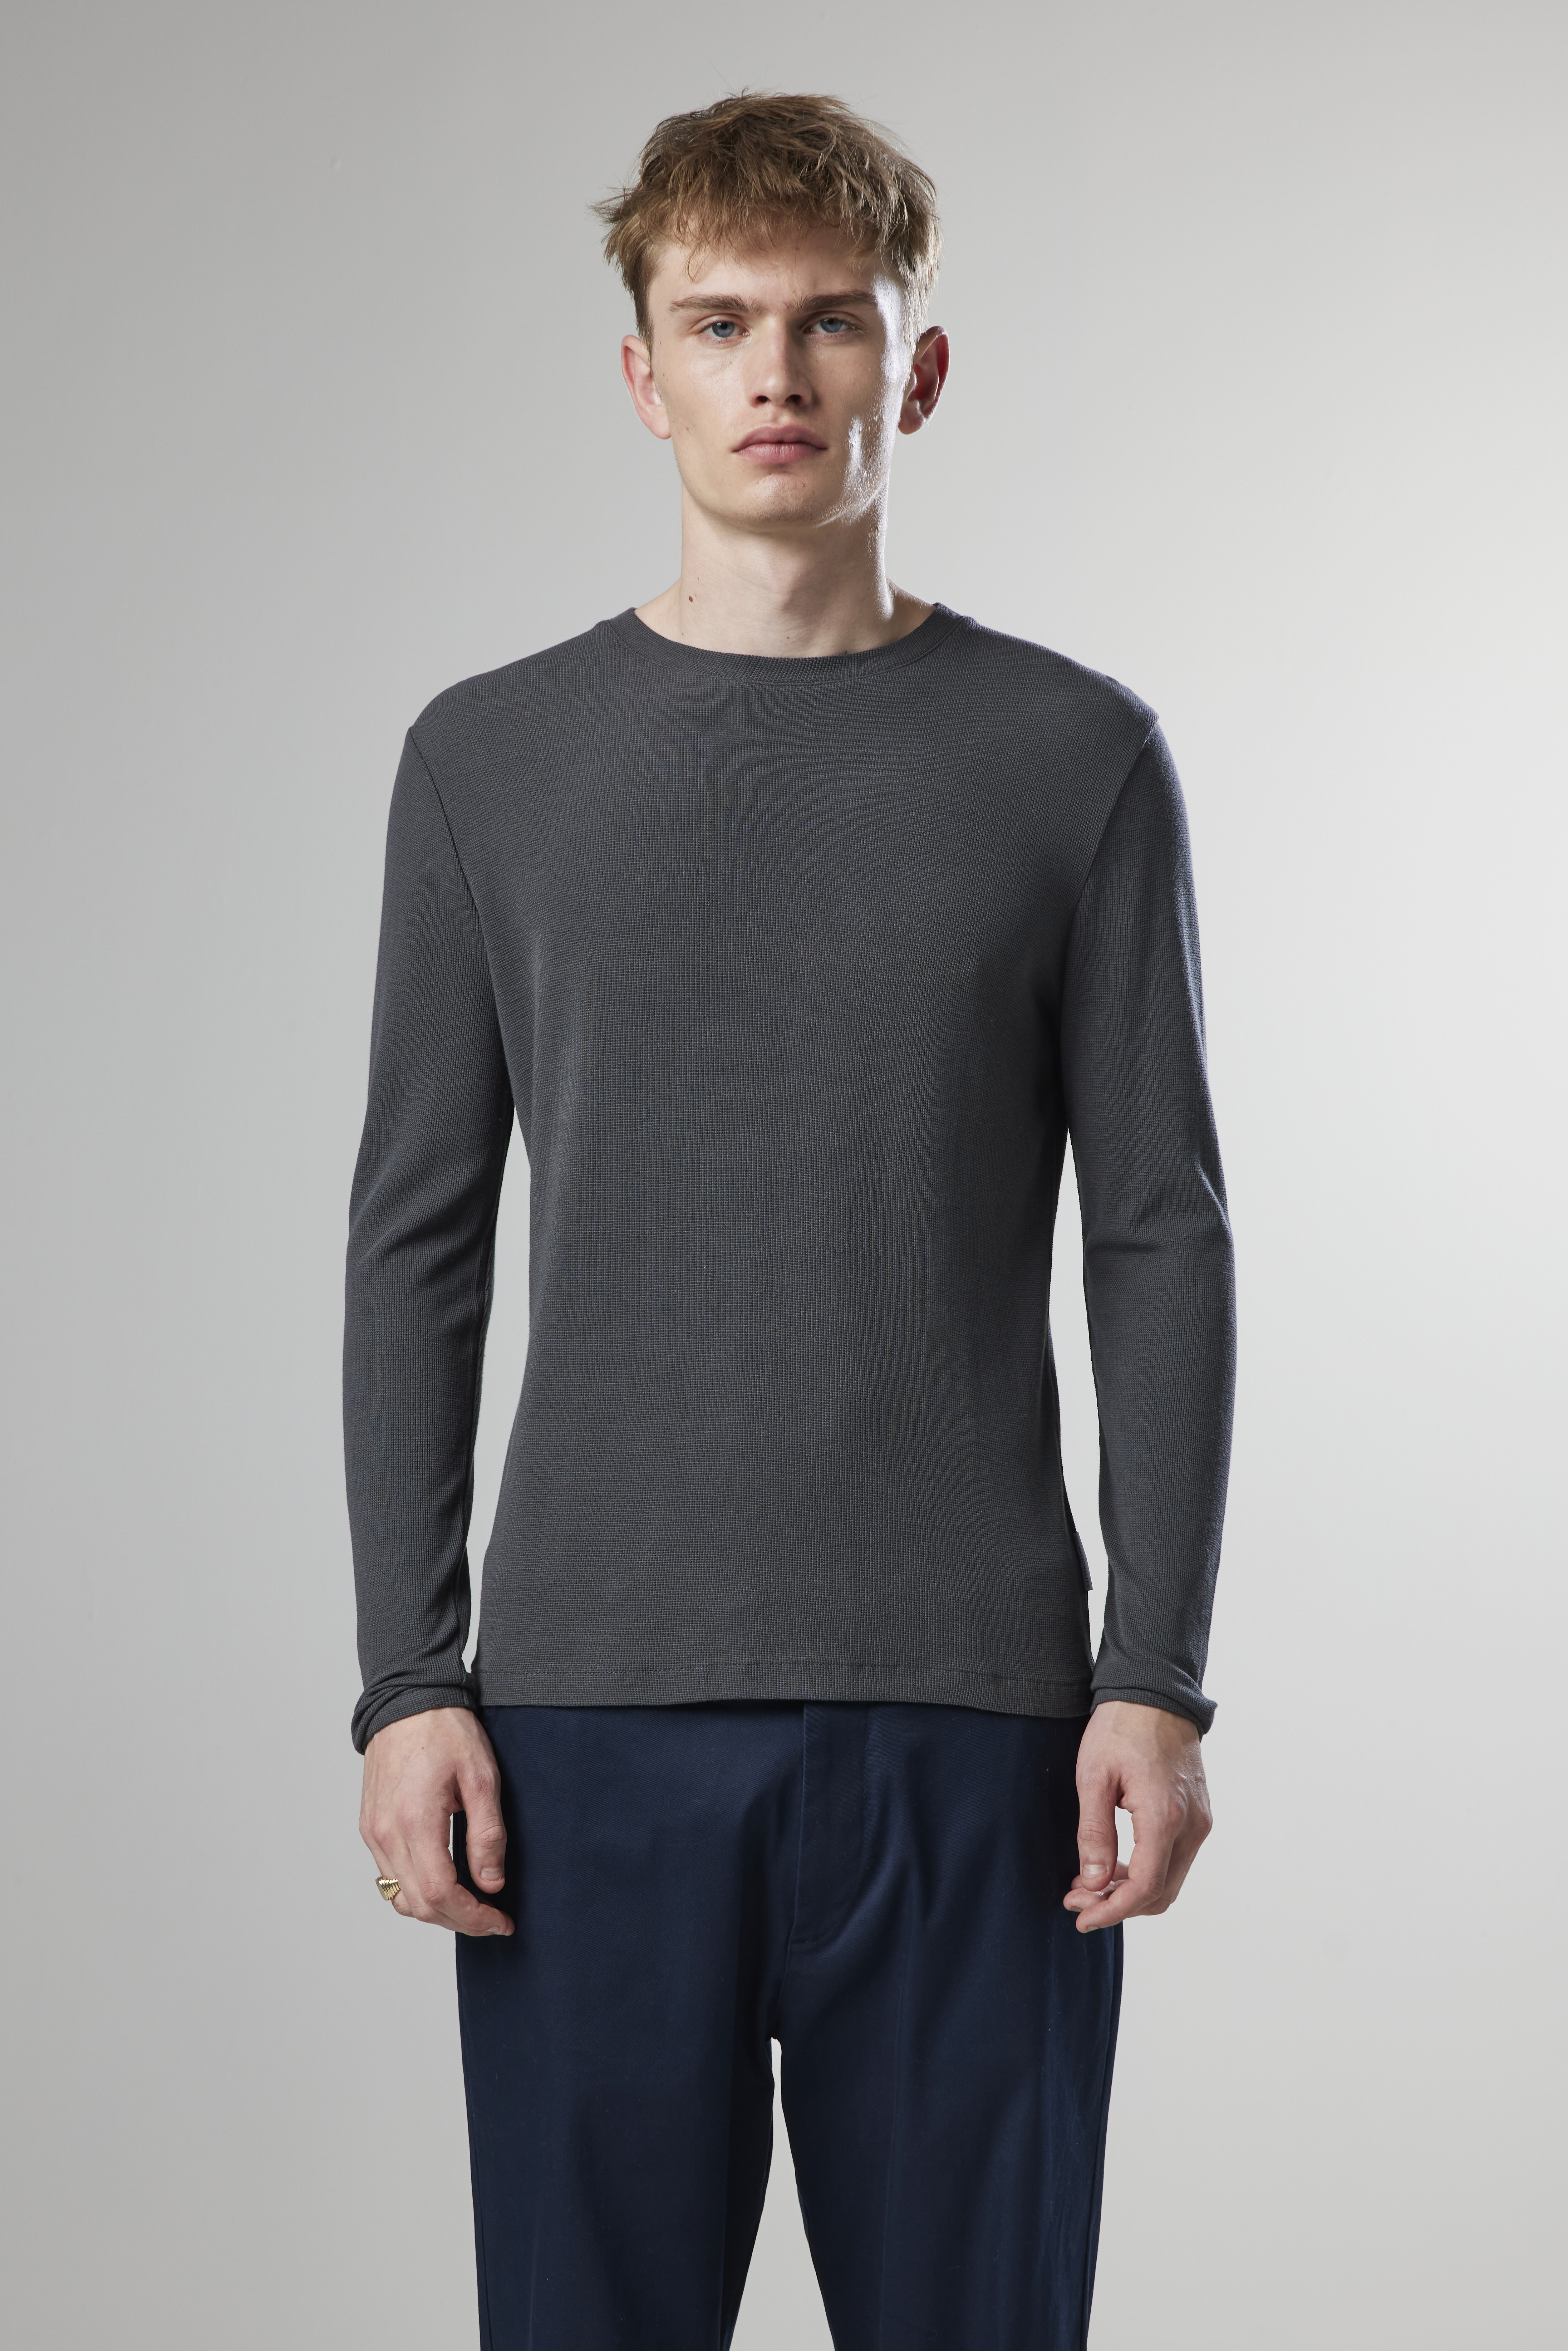 Clive 3323 men\'s t-shirt - Grey - Buy online at